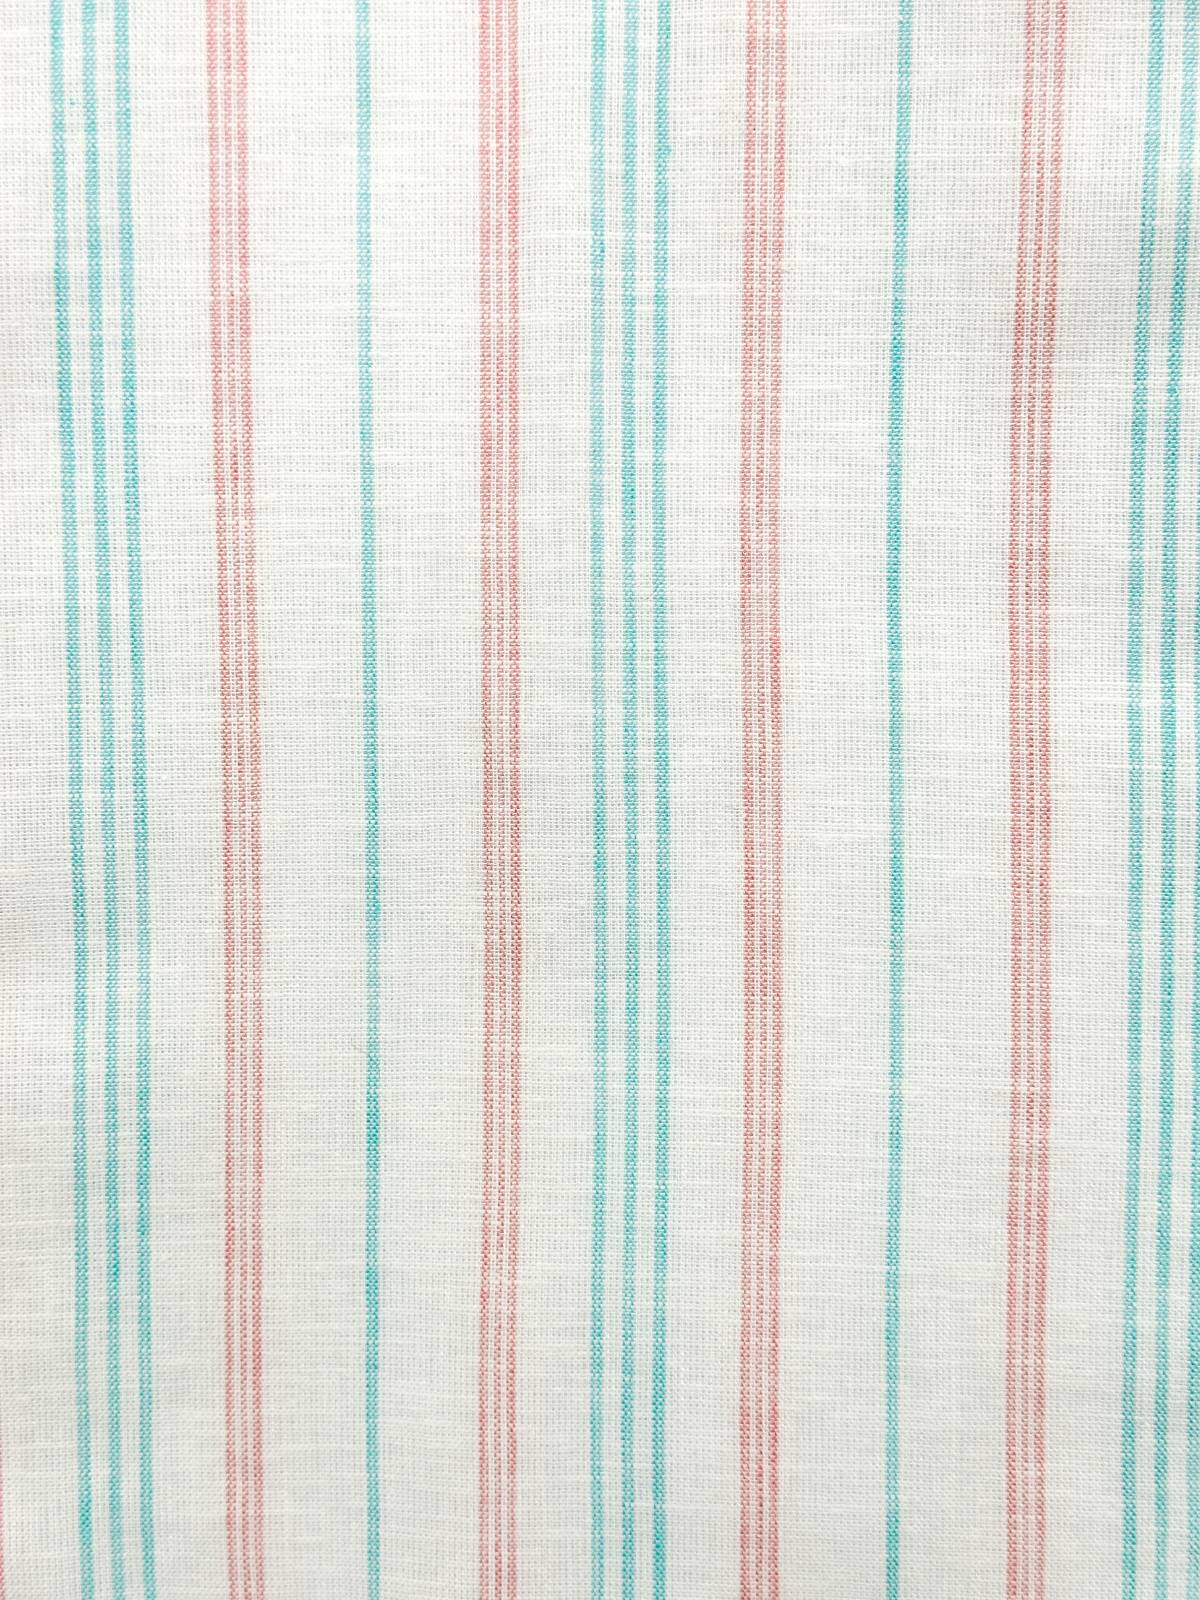 Positano Stripe Linen S/S Shirt - Blue/Pink/White